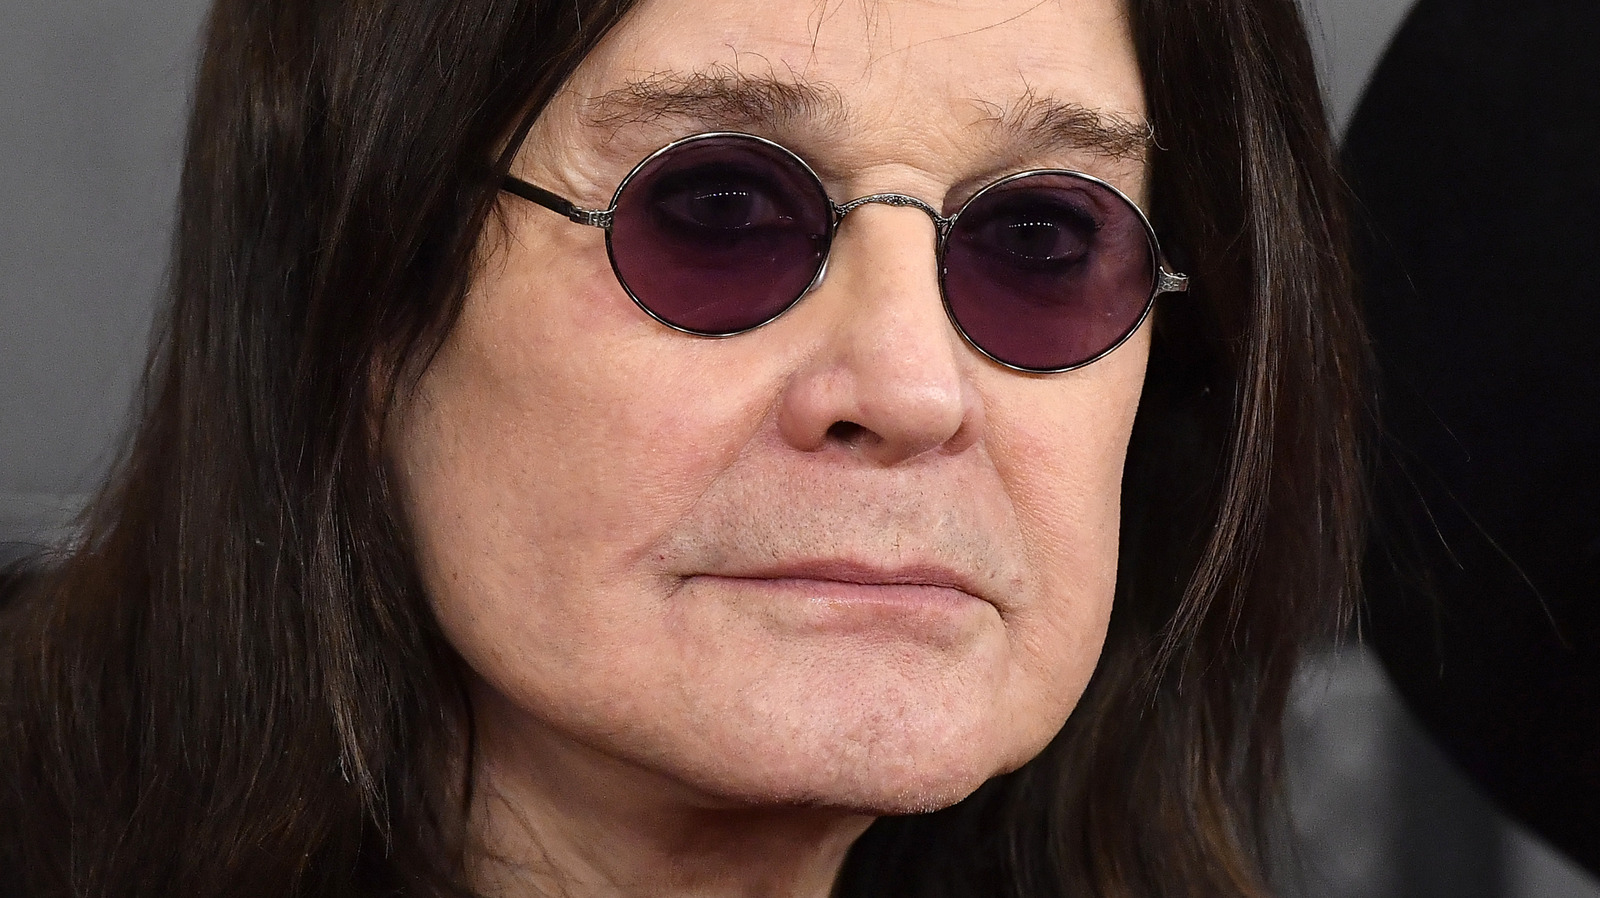 Ozzy Osbourne Makes A Major Return After Life-Altering Surgery